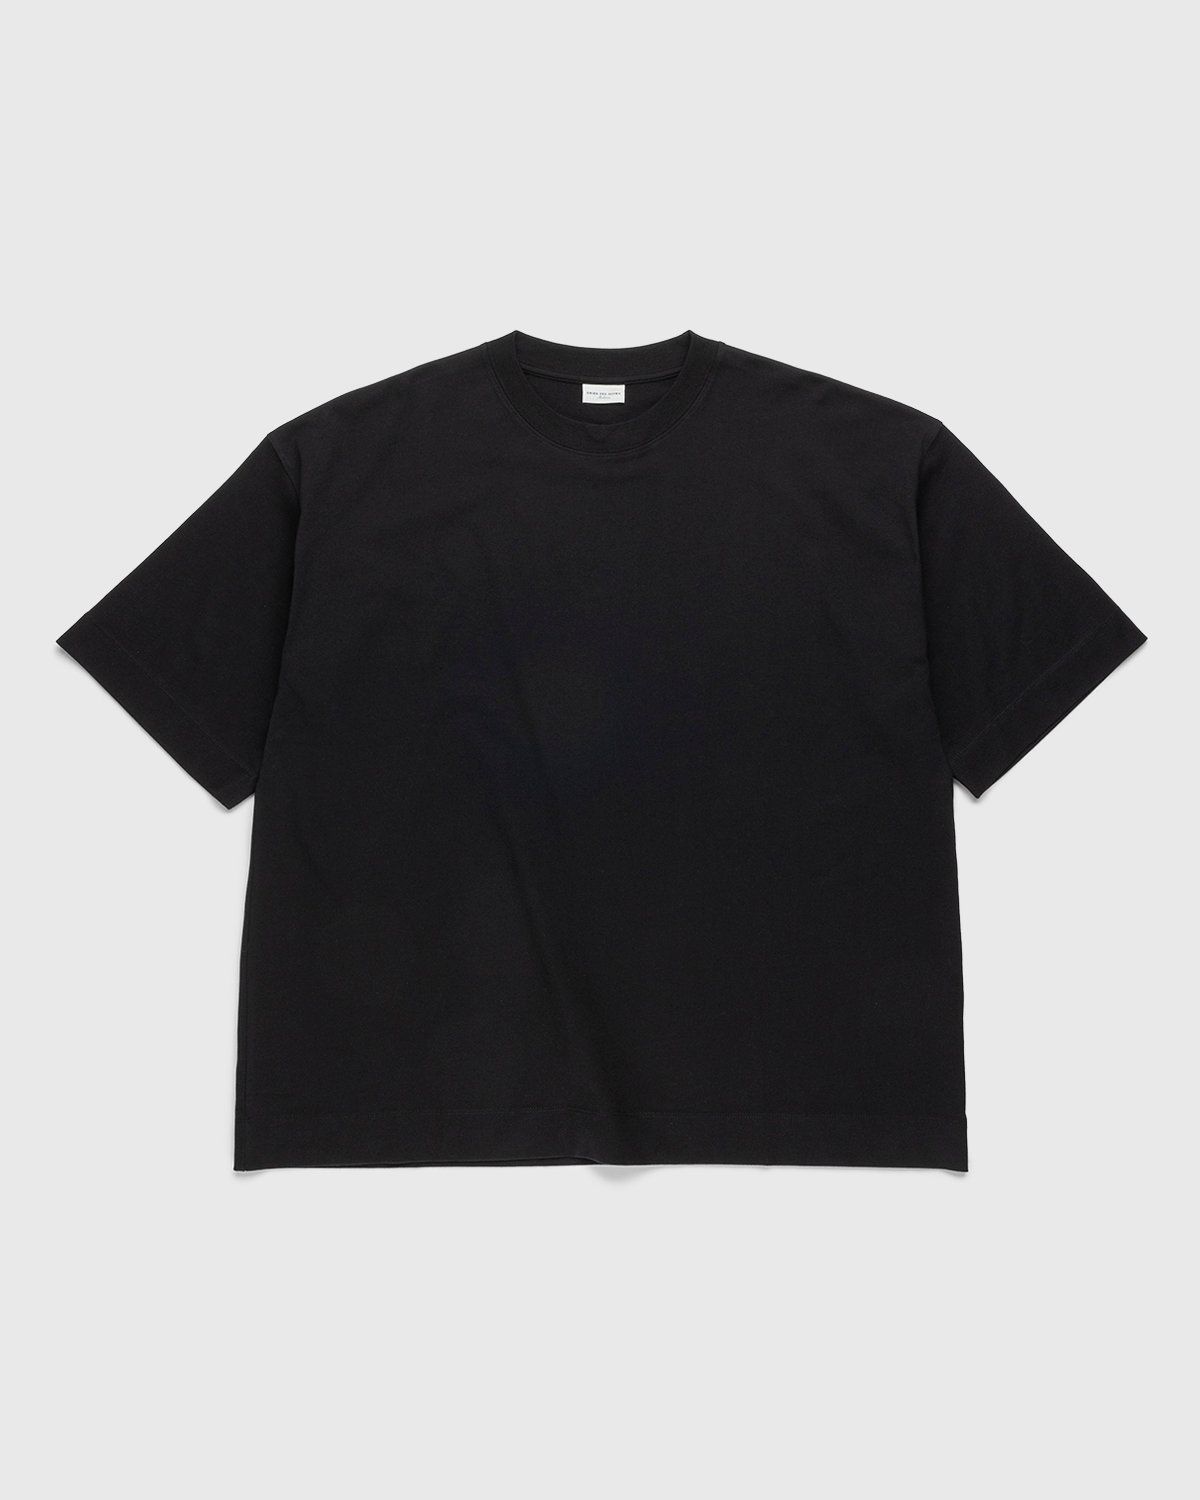 Dries van Noten – Hen Oversized T-Shirt Black | Highsnobiety Shop